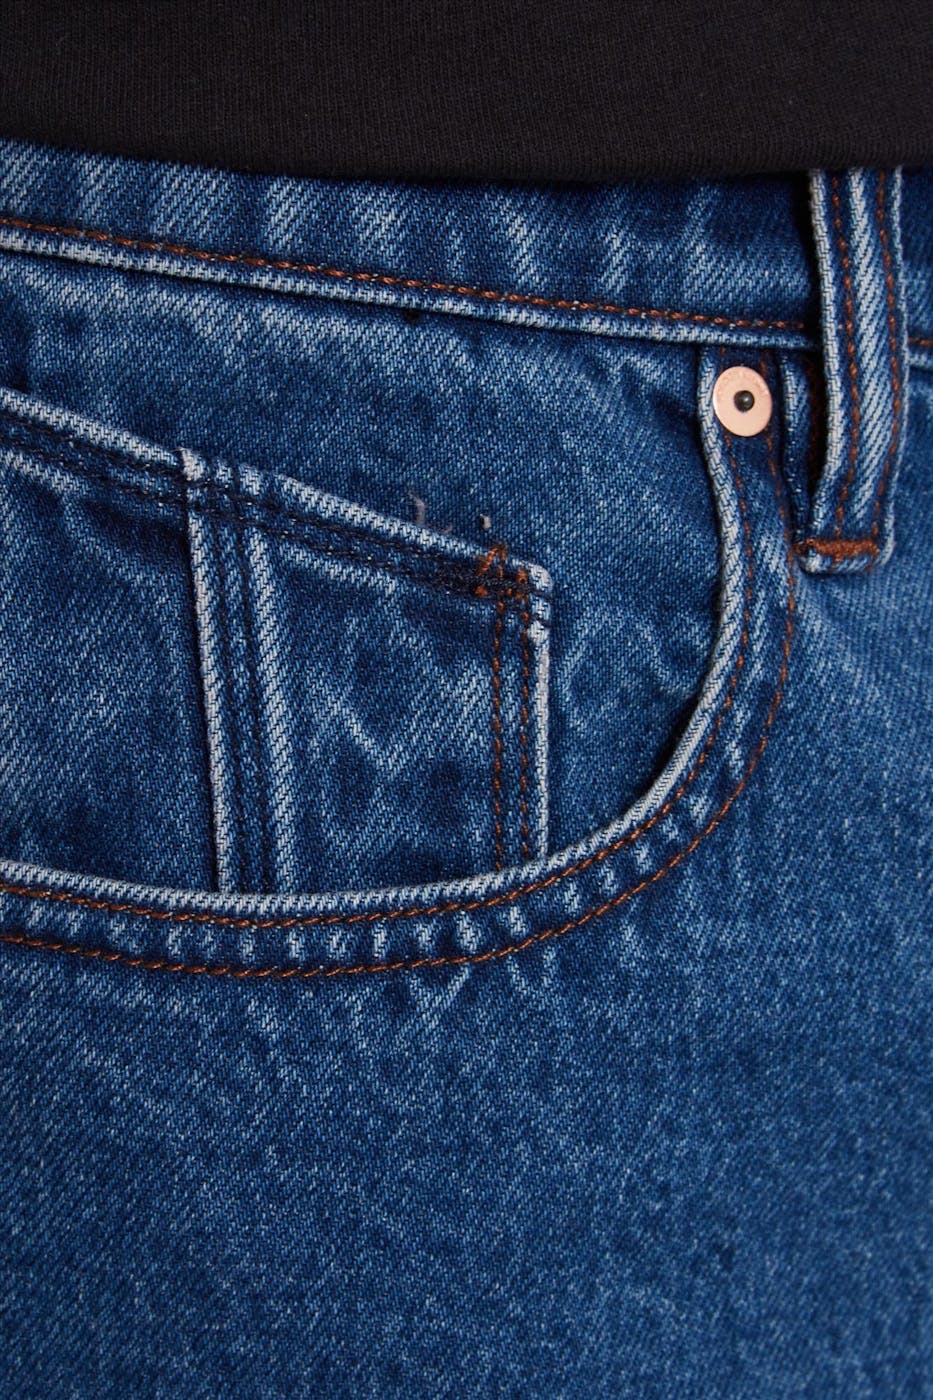 Volcom - Donkerblauwe Billow jeansshort